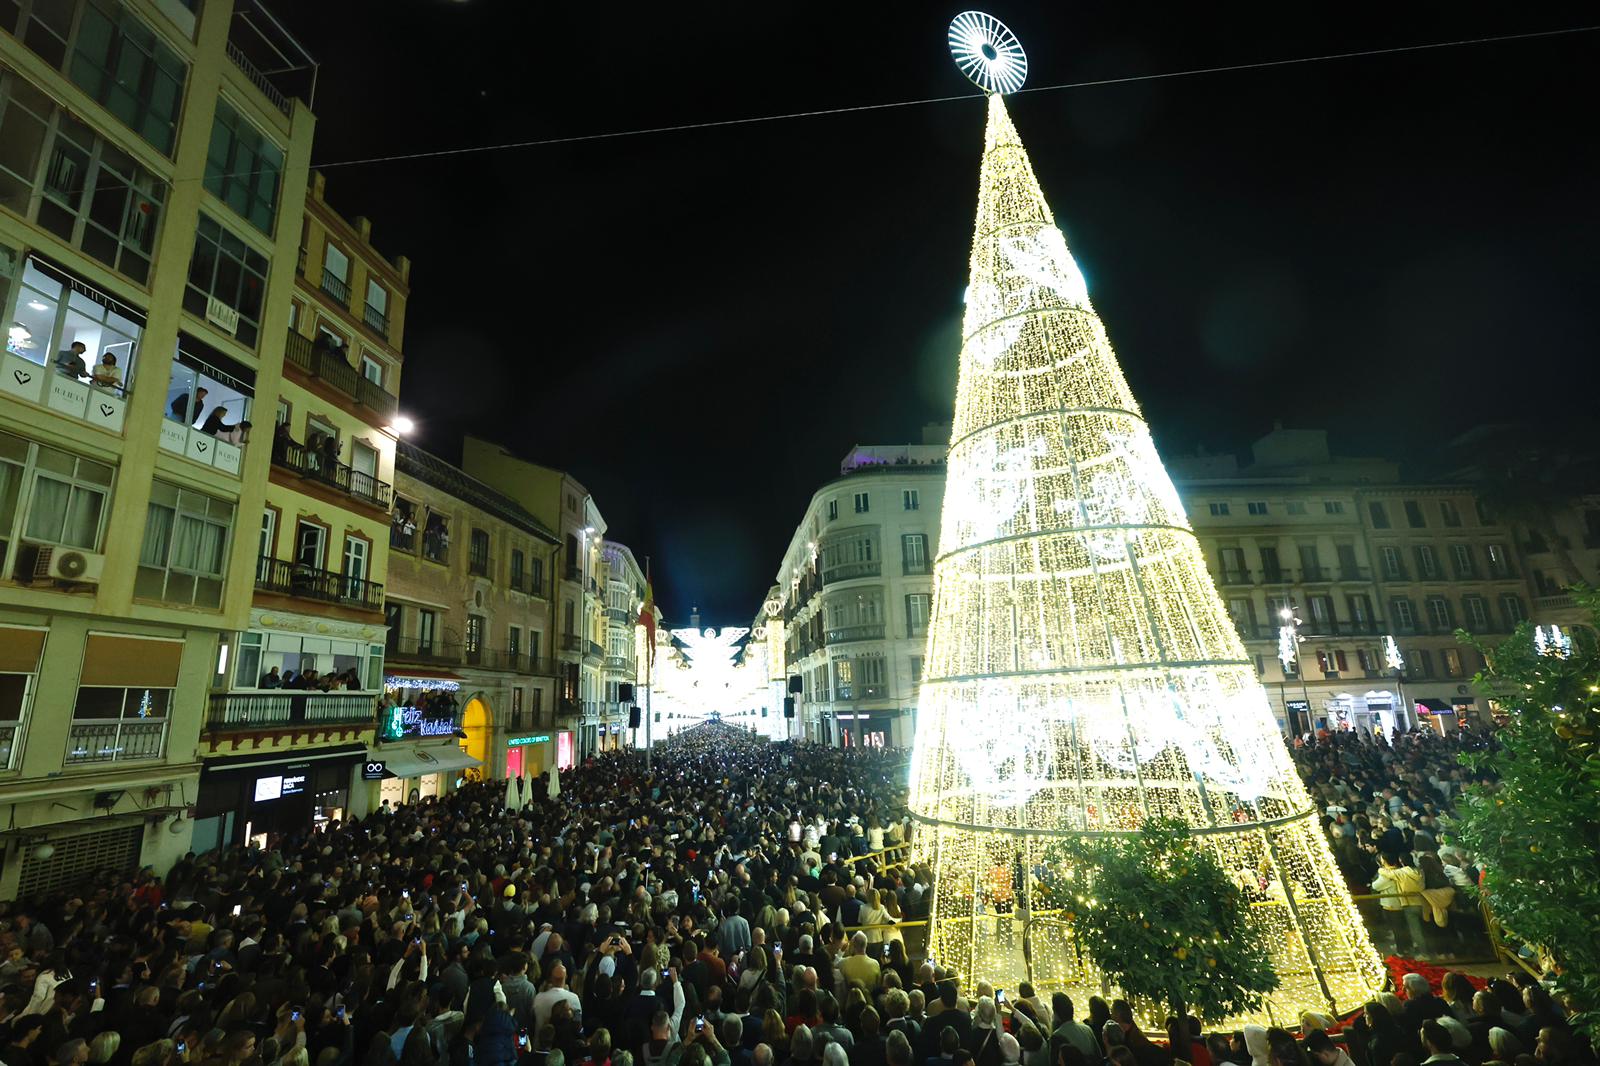 Christmas lights in Malaga city centre.